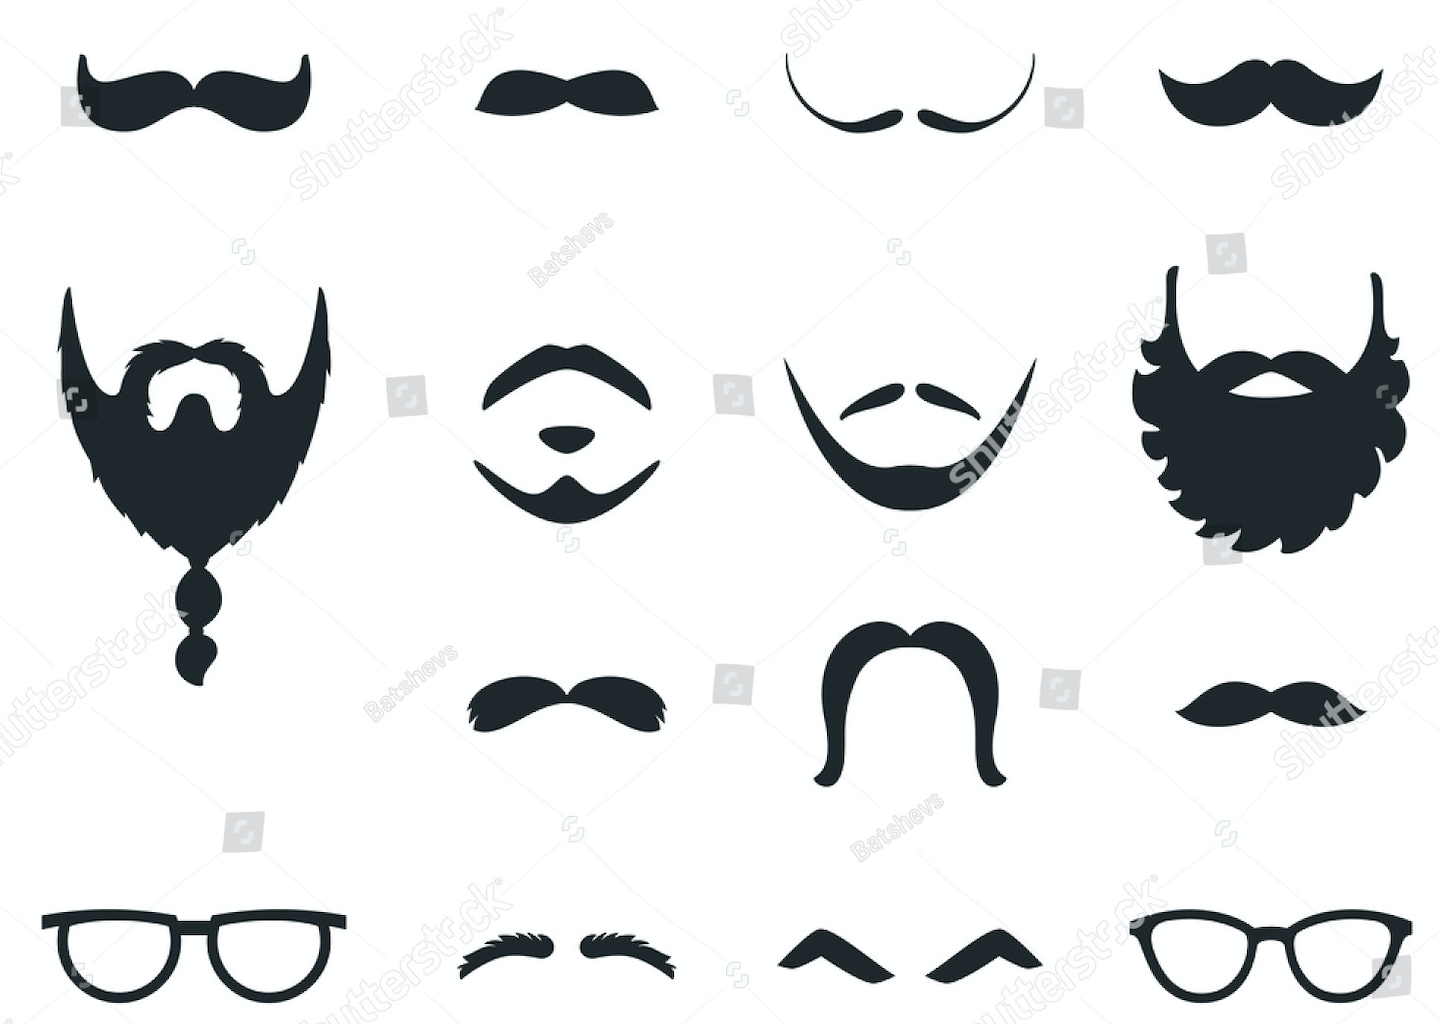 Beards & Mustaches